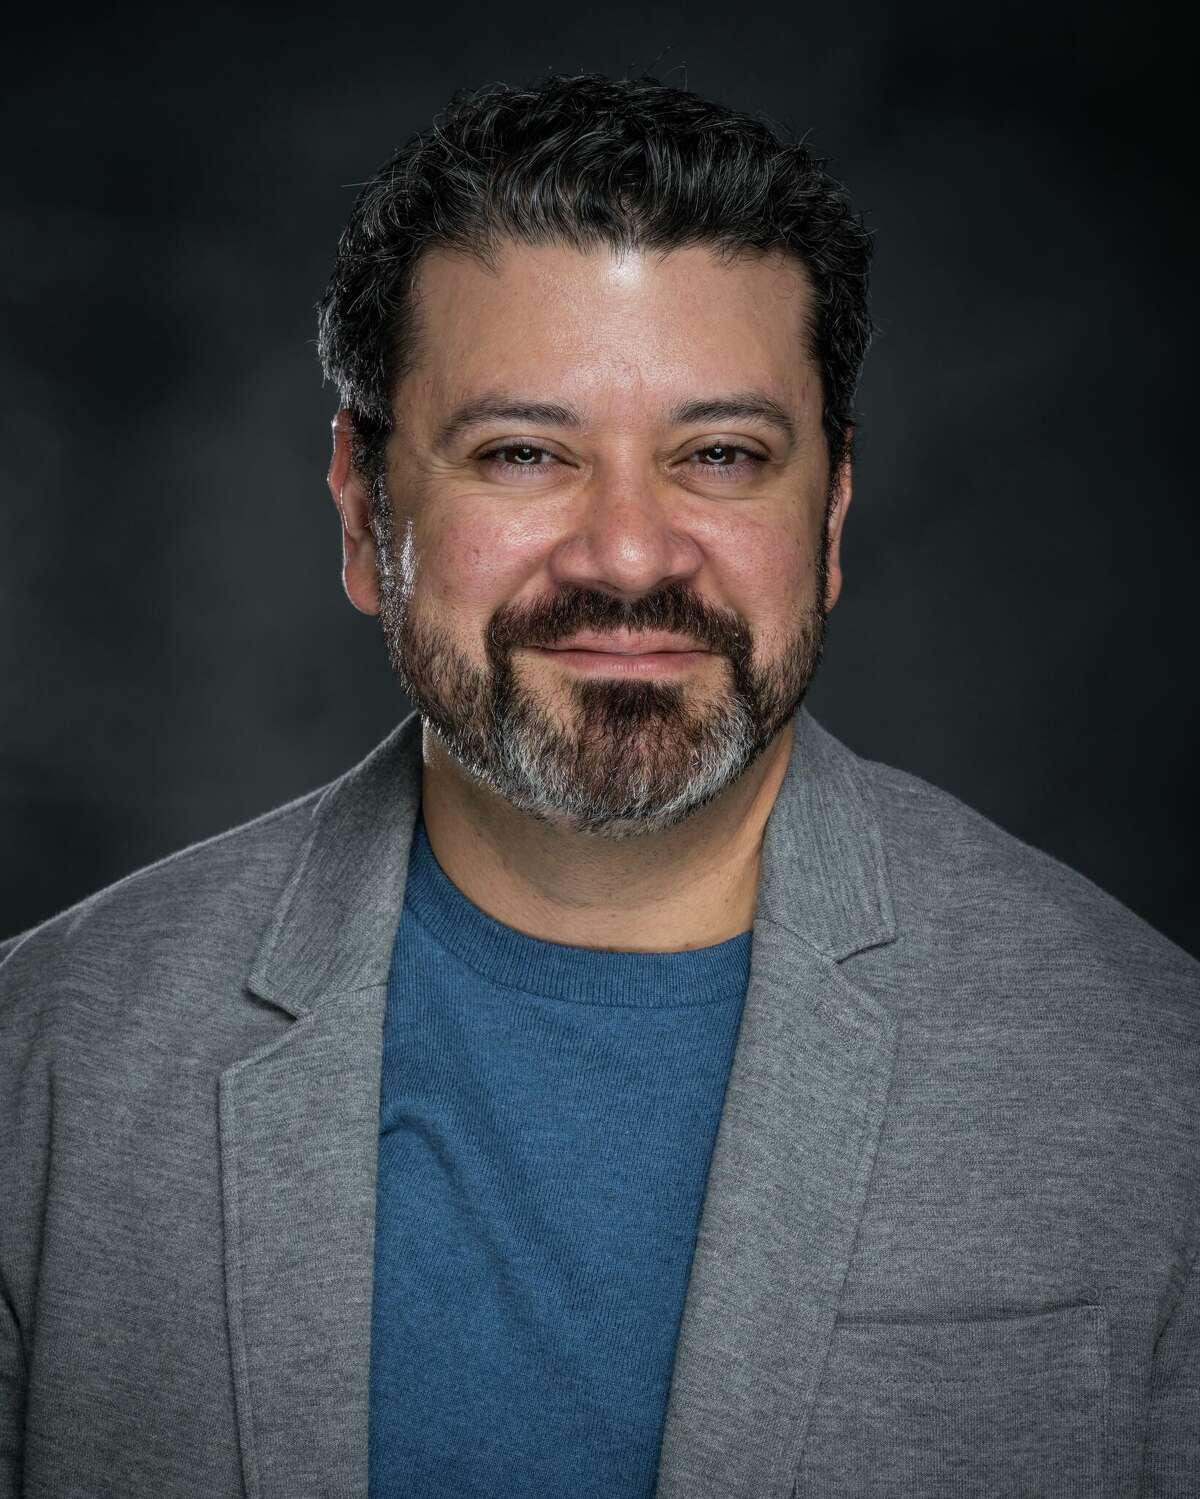 KSAT 12's new news director Mario Orellana